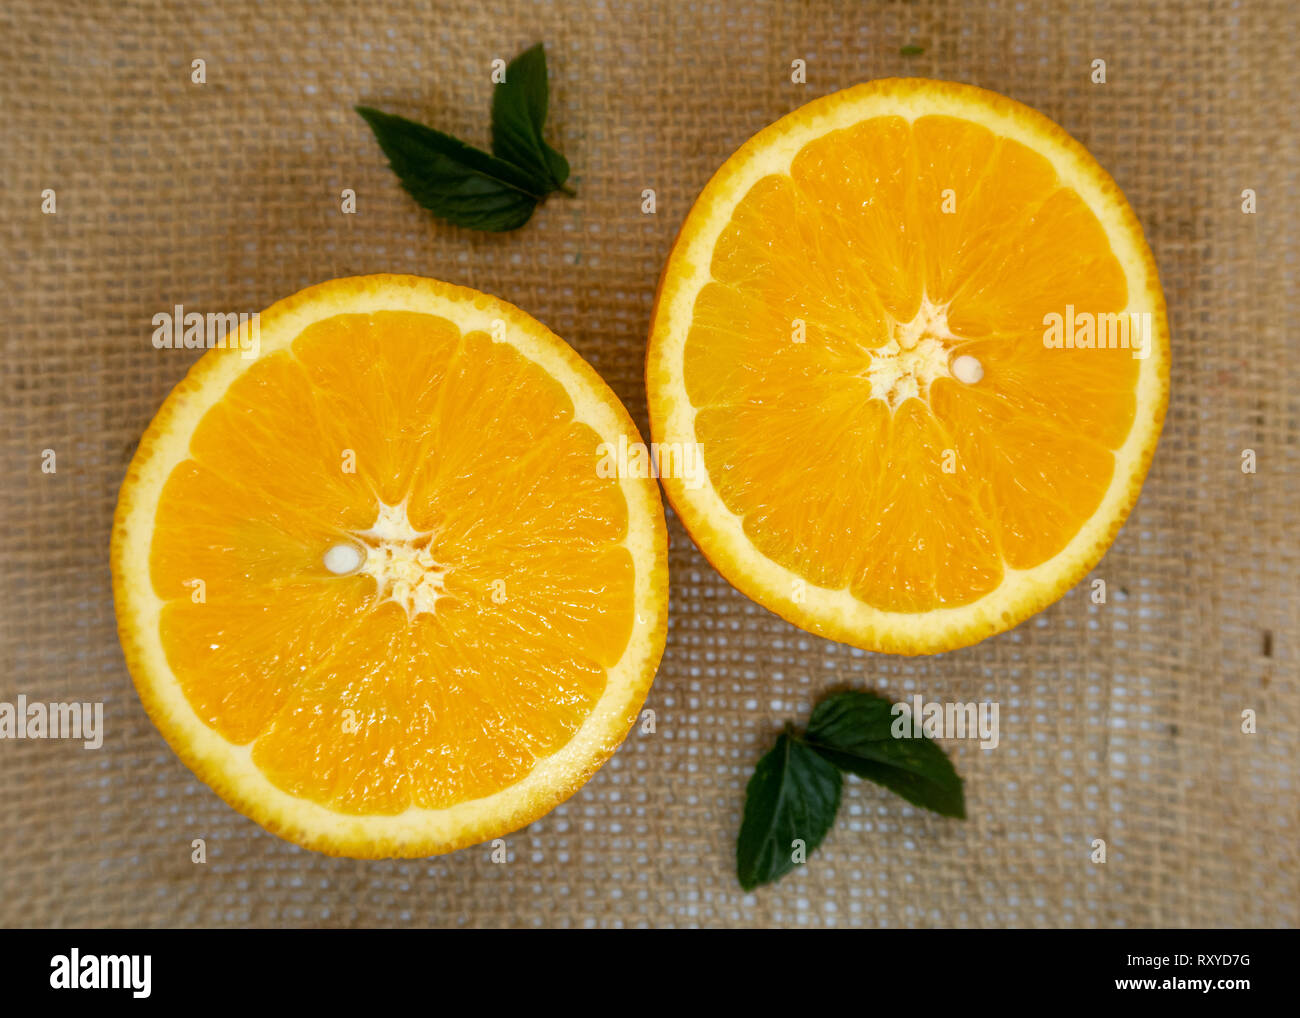 Cut fresh juicy orange halves on a hessian background Stock Photo